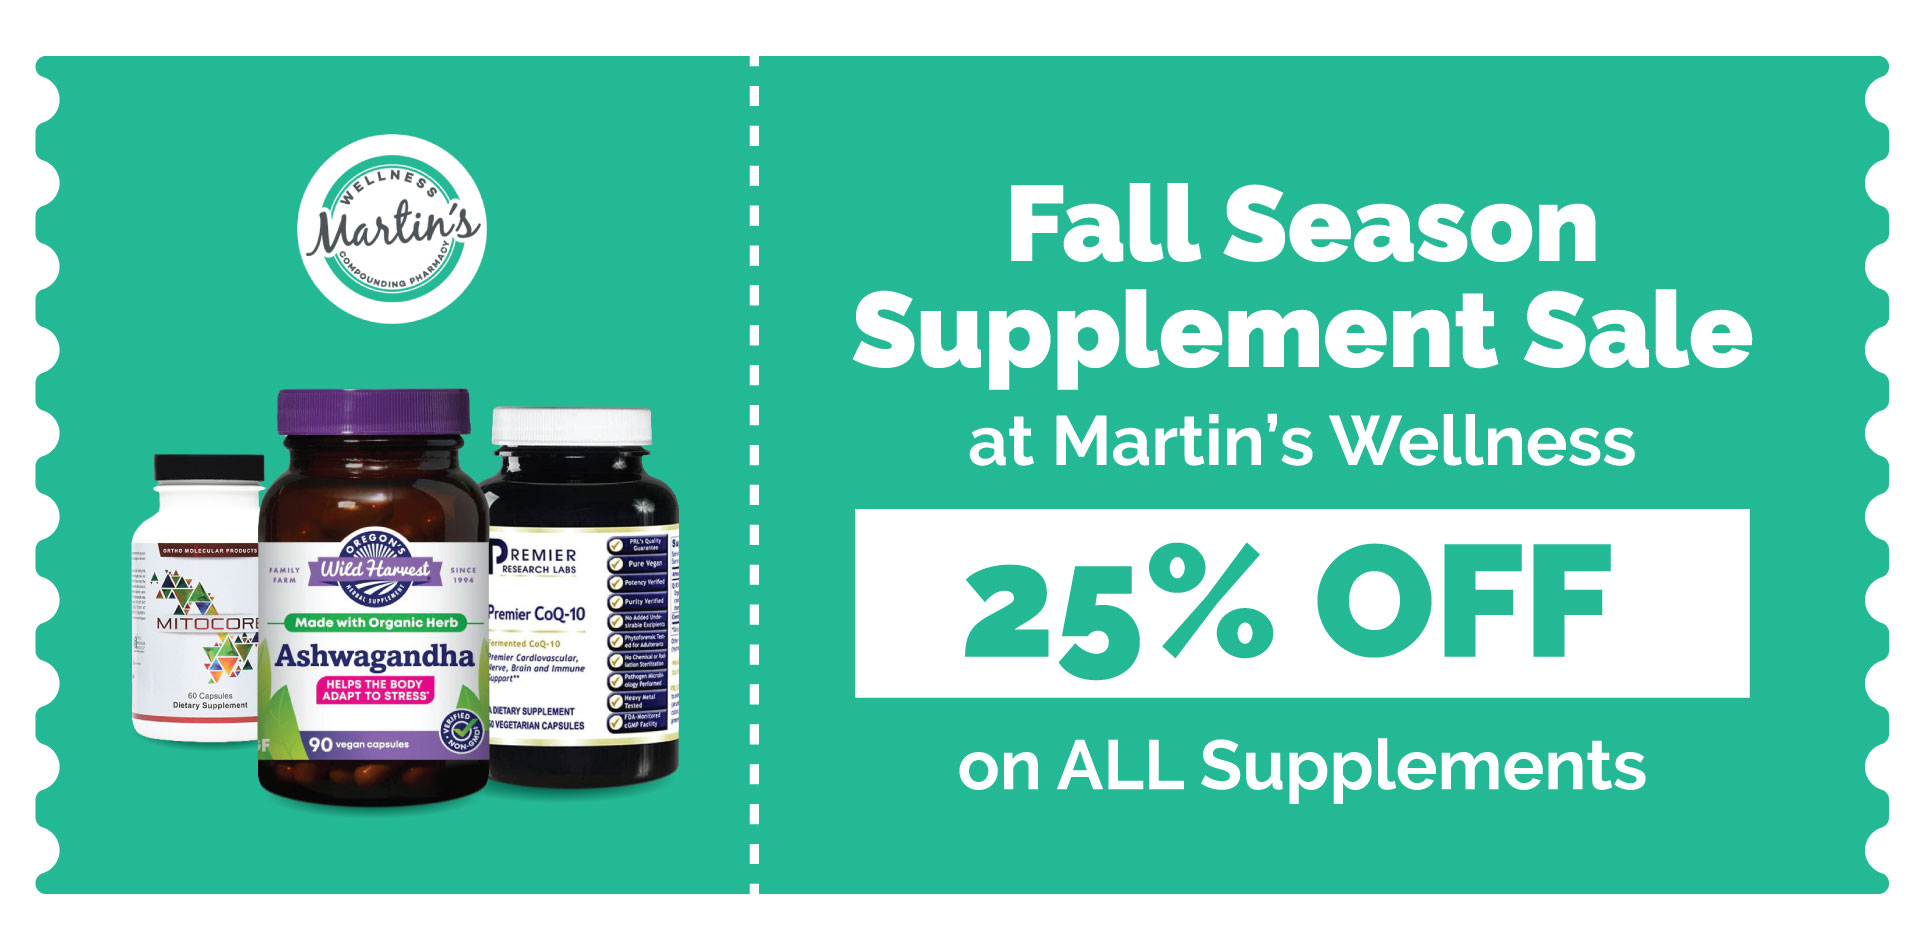 Fall Season Supplement Sale at Martin’s Wellness